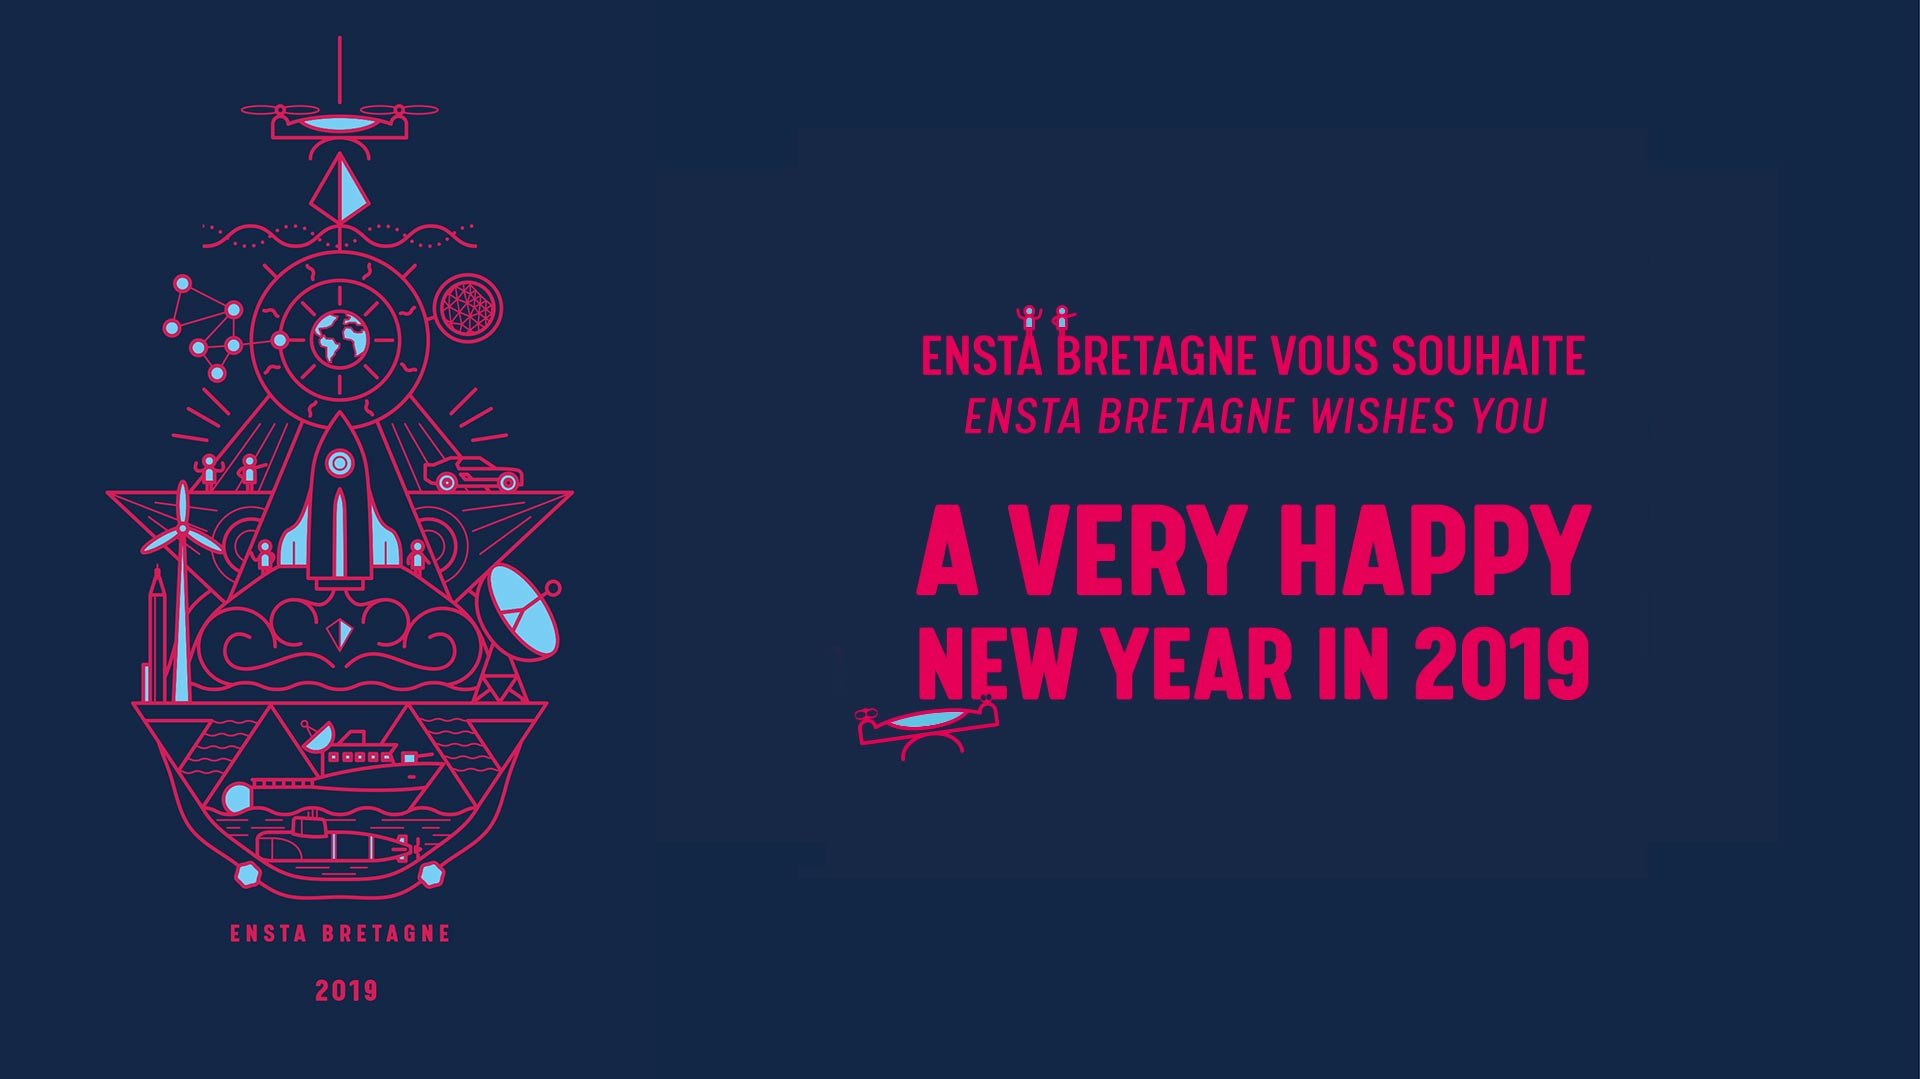 ENSTA Bretagne: Happy New Year 2019